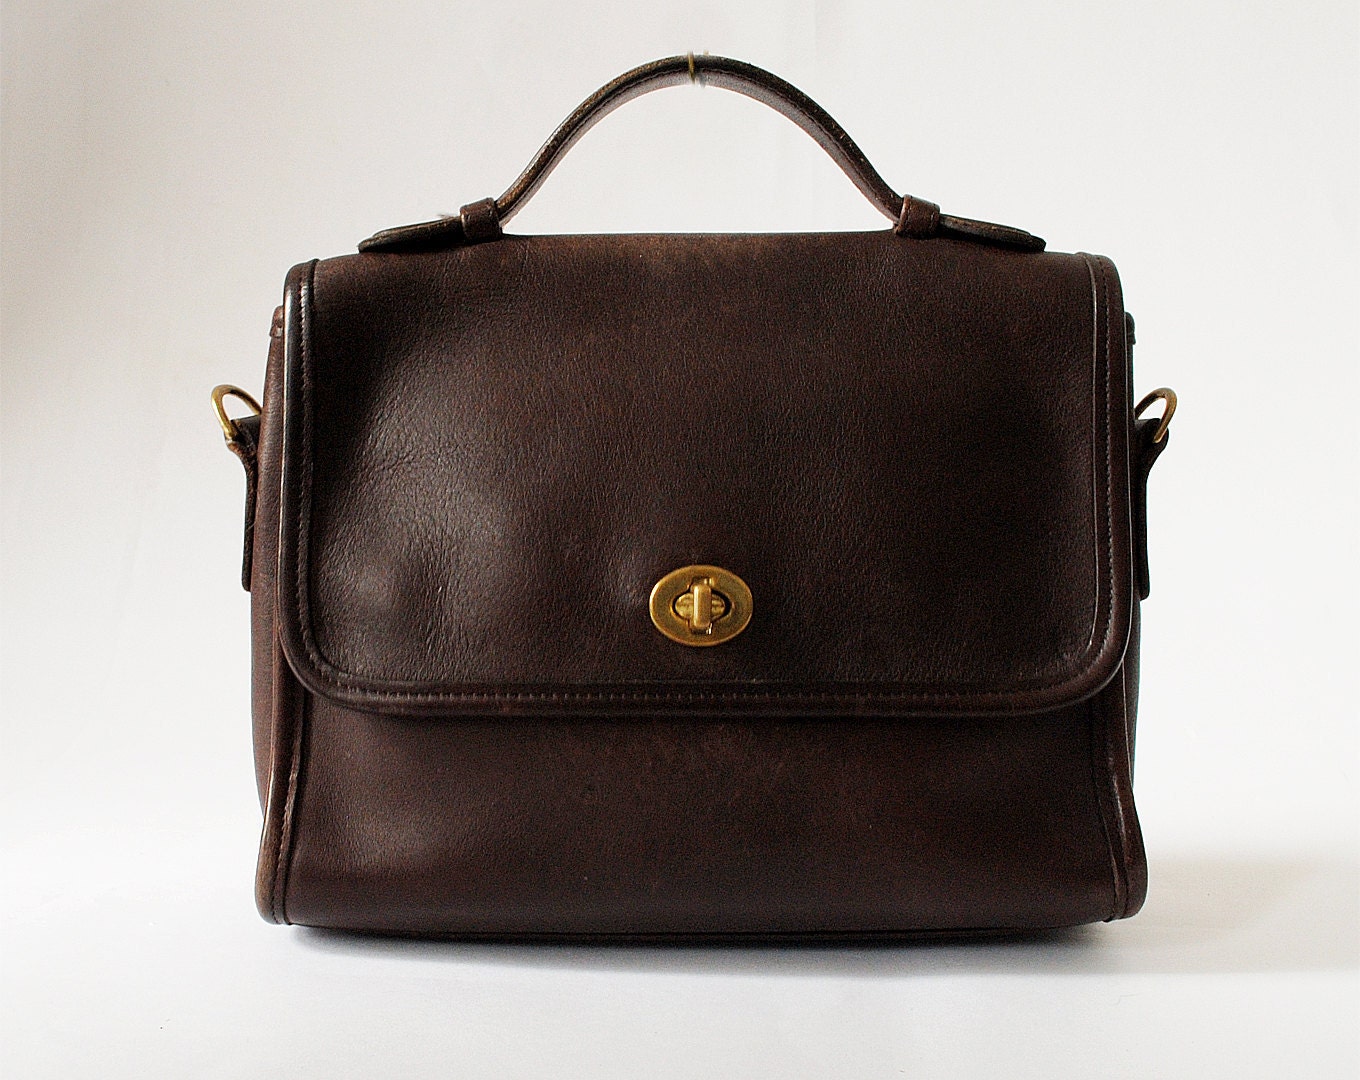 Vintage Coach Handbag Dark Brown Leather Purse by thespeckledperch